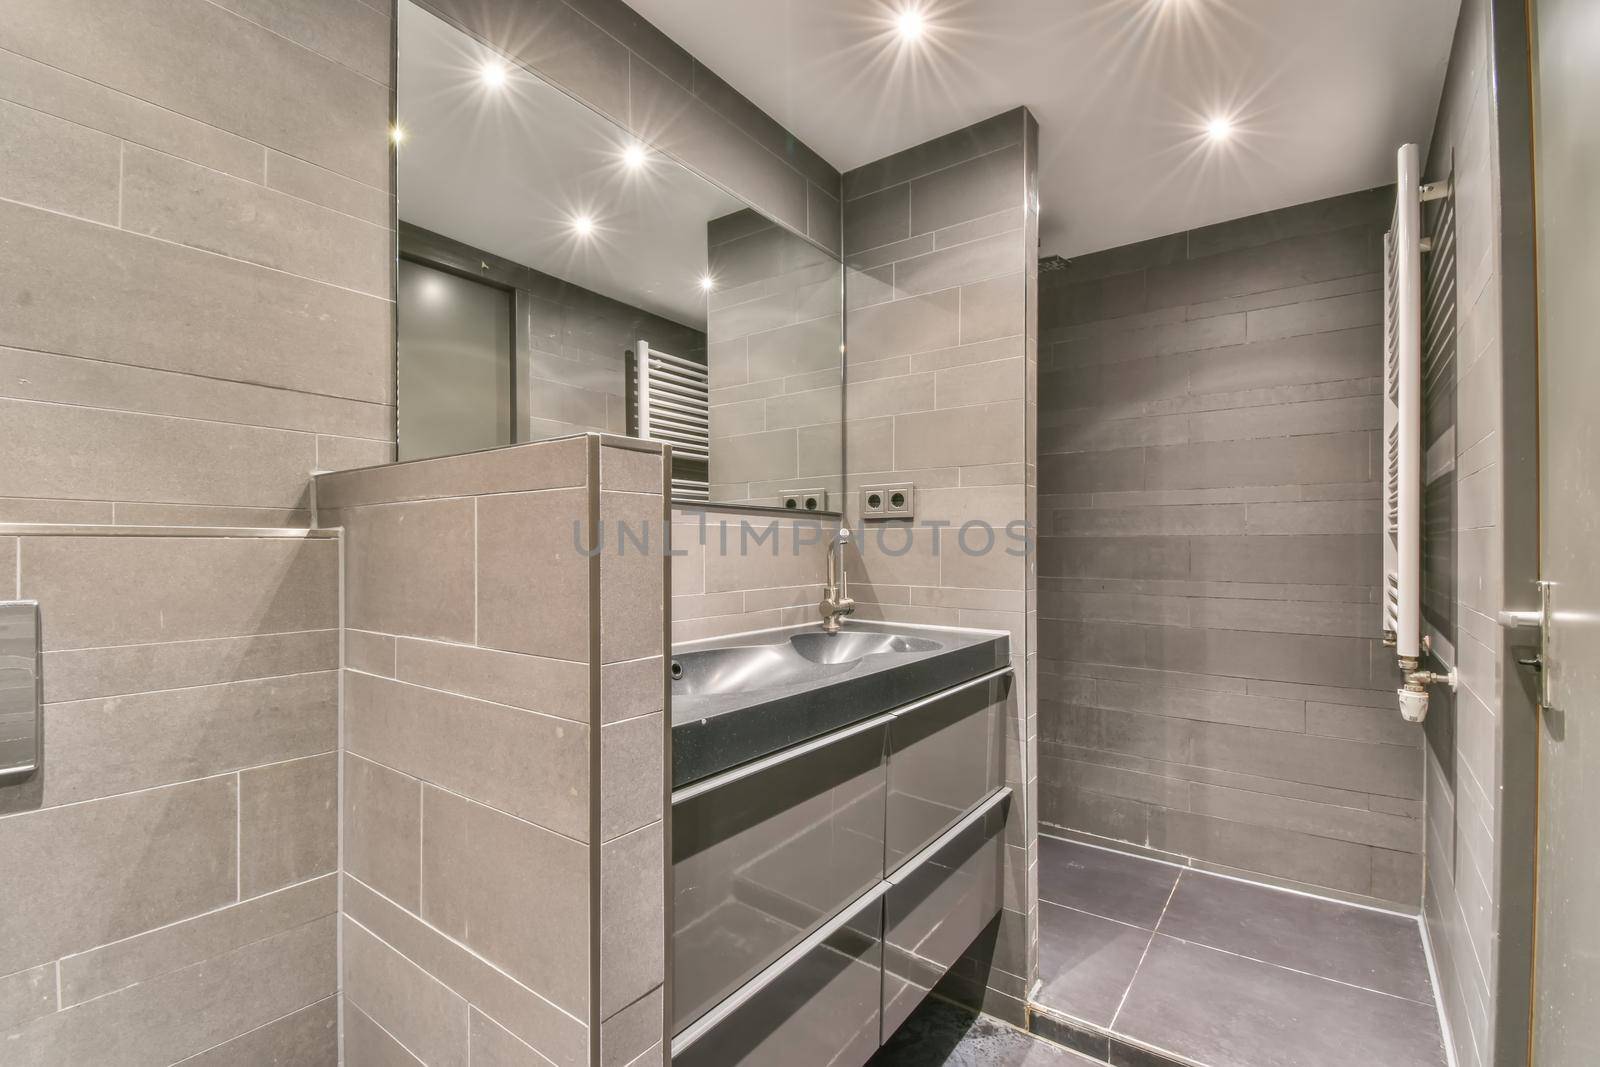 Luxury bathroom interior by casamedia